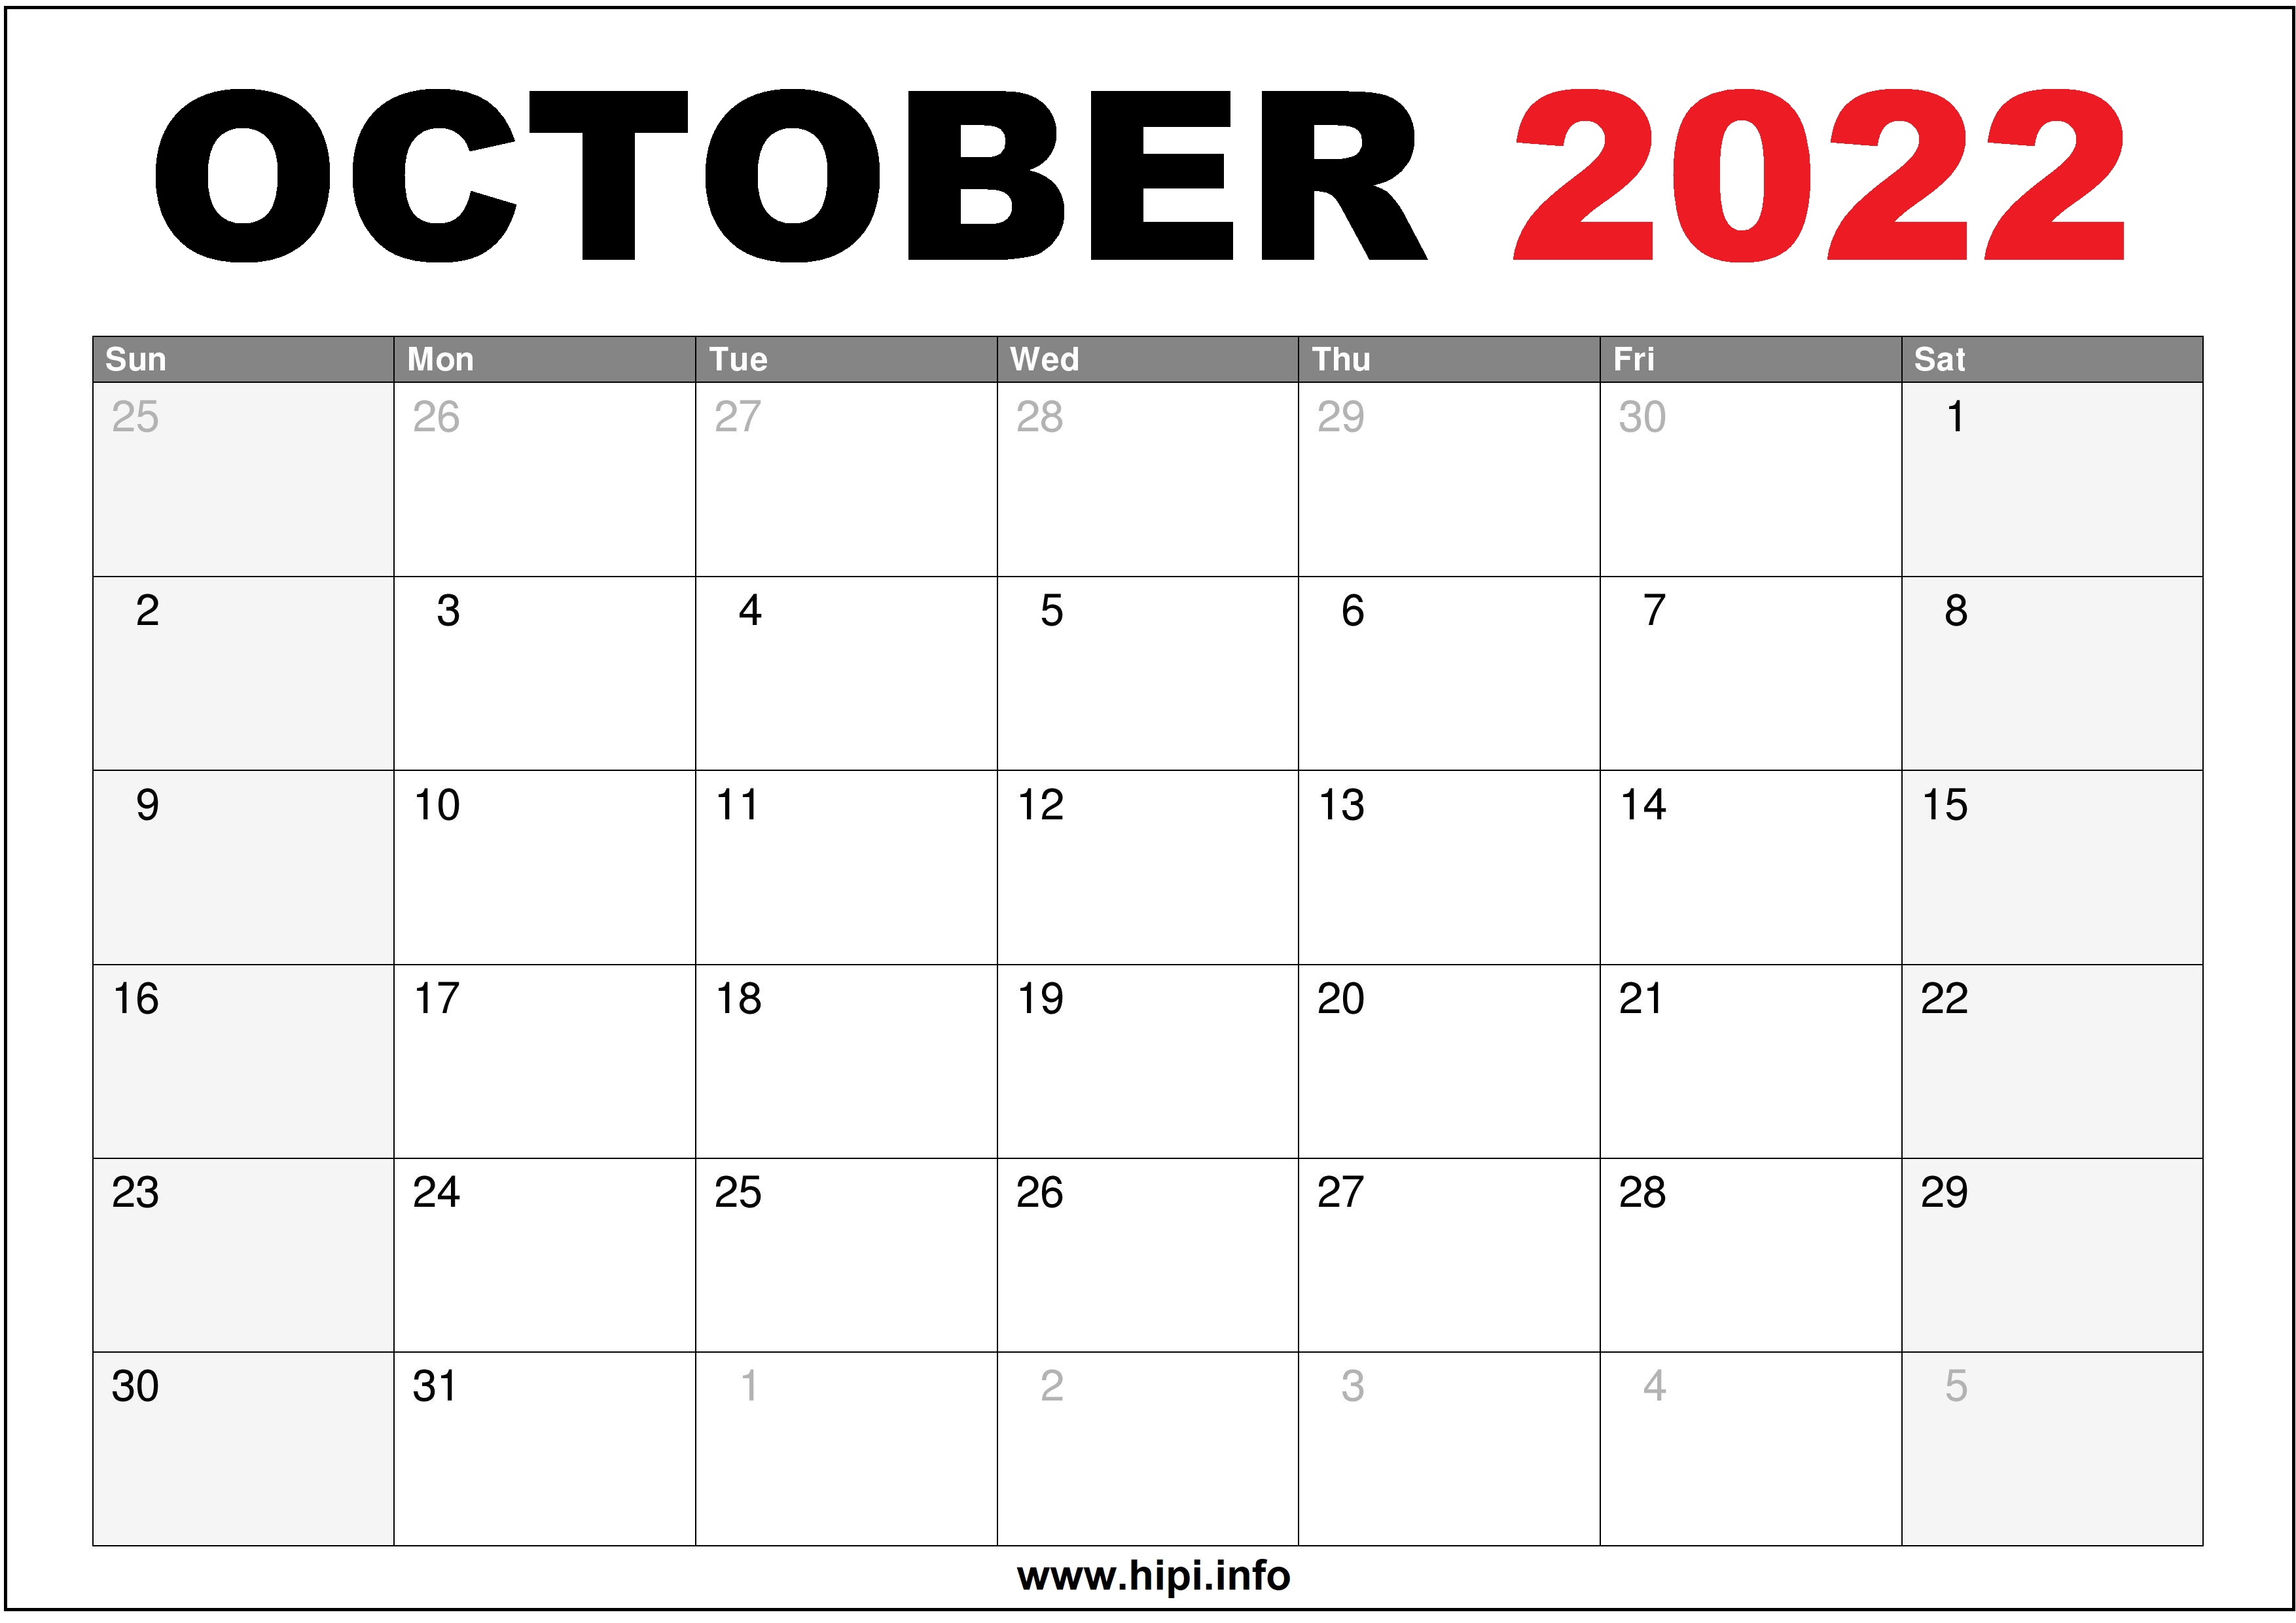 October 2022 Calendar Printable October 2022 Calendar Printable Us - Hipi.info | Calendars Printable Free